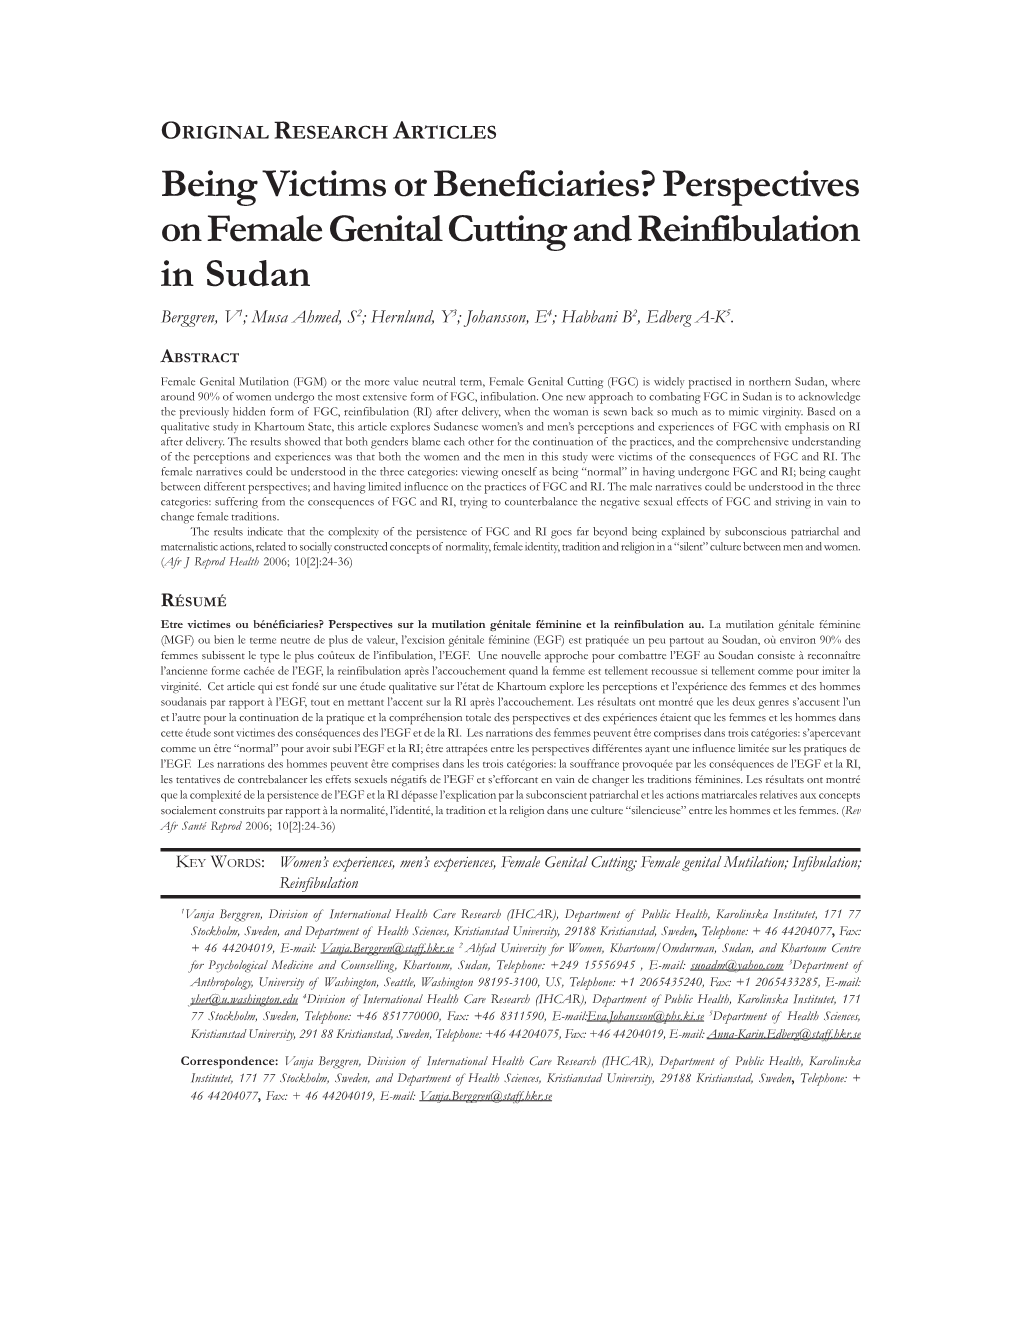 Perspectives on Female Genital Cutting and Reinfibulation in Sudan Berggren, V1; Musa Ahmed, S2; Hernlund, Y3; Johansson, E4; Habbani B2, Edberg A-K5